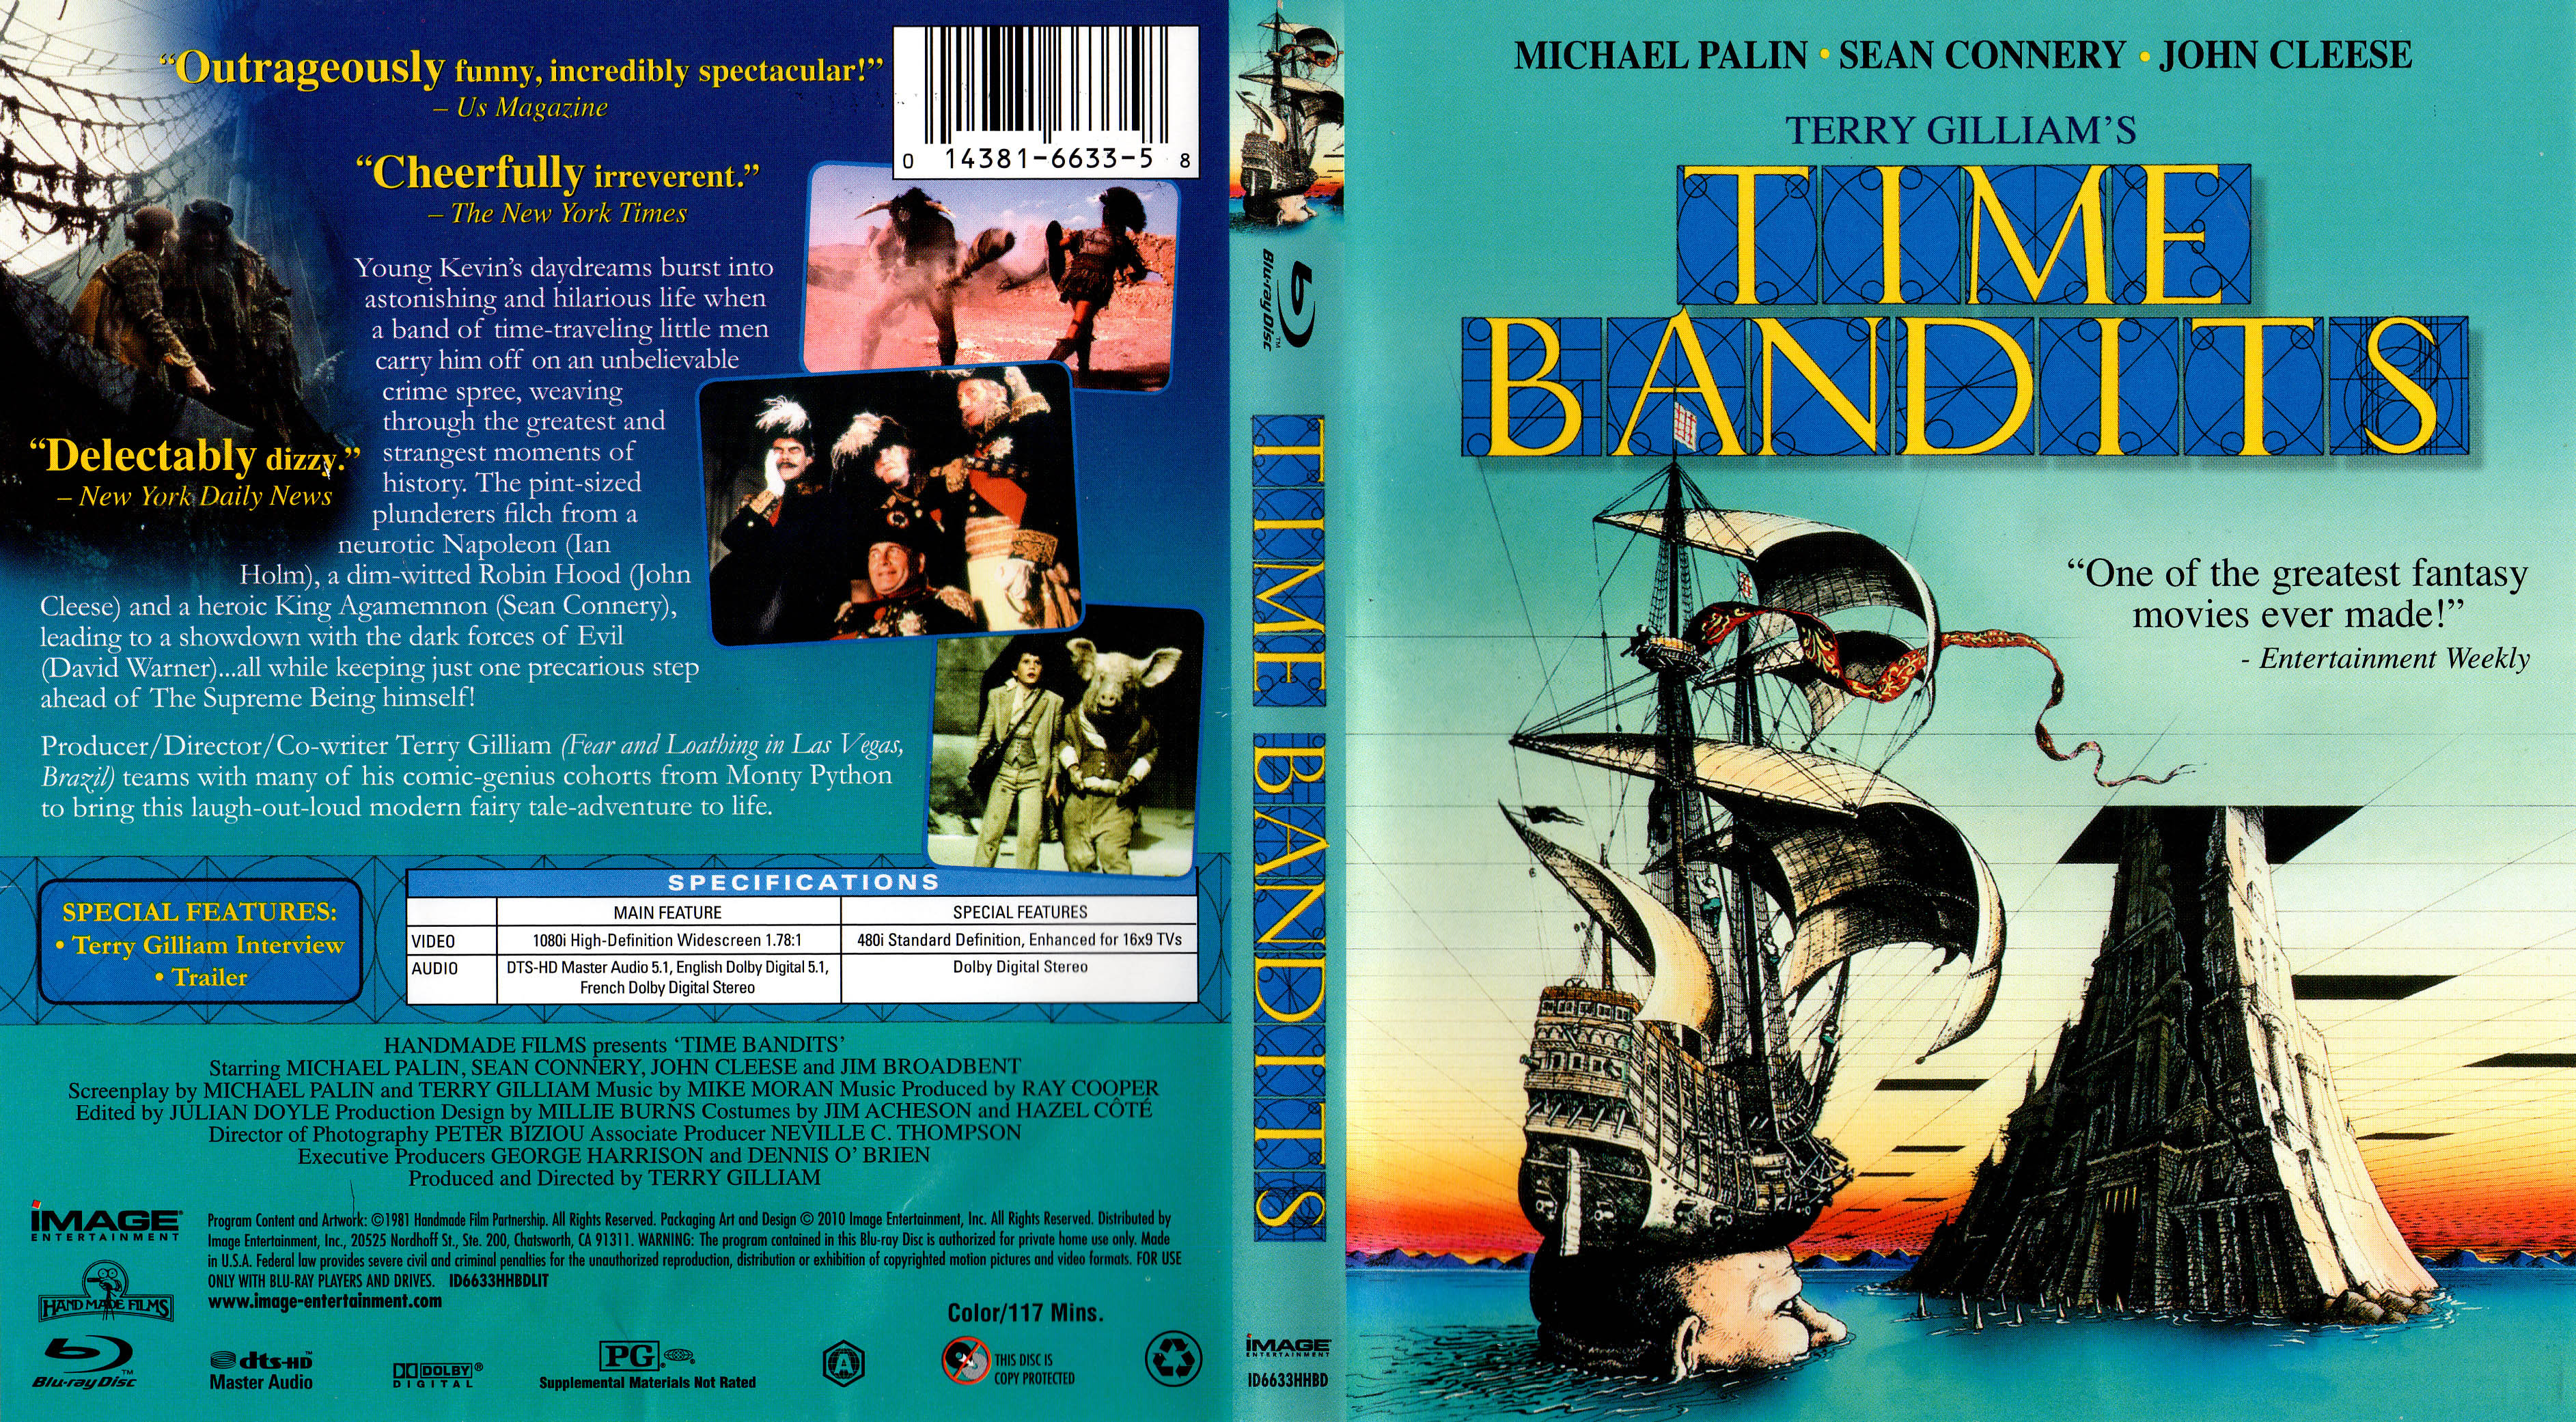 Jaquette DVD Time bandits - Bandits, bandits Zone 1 (BLU-RAY)